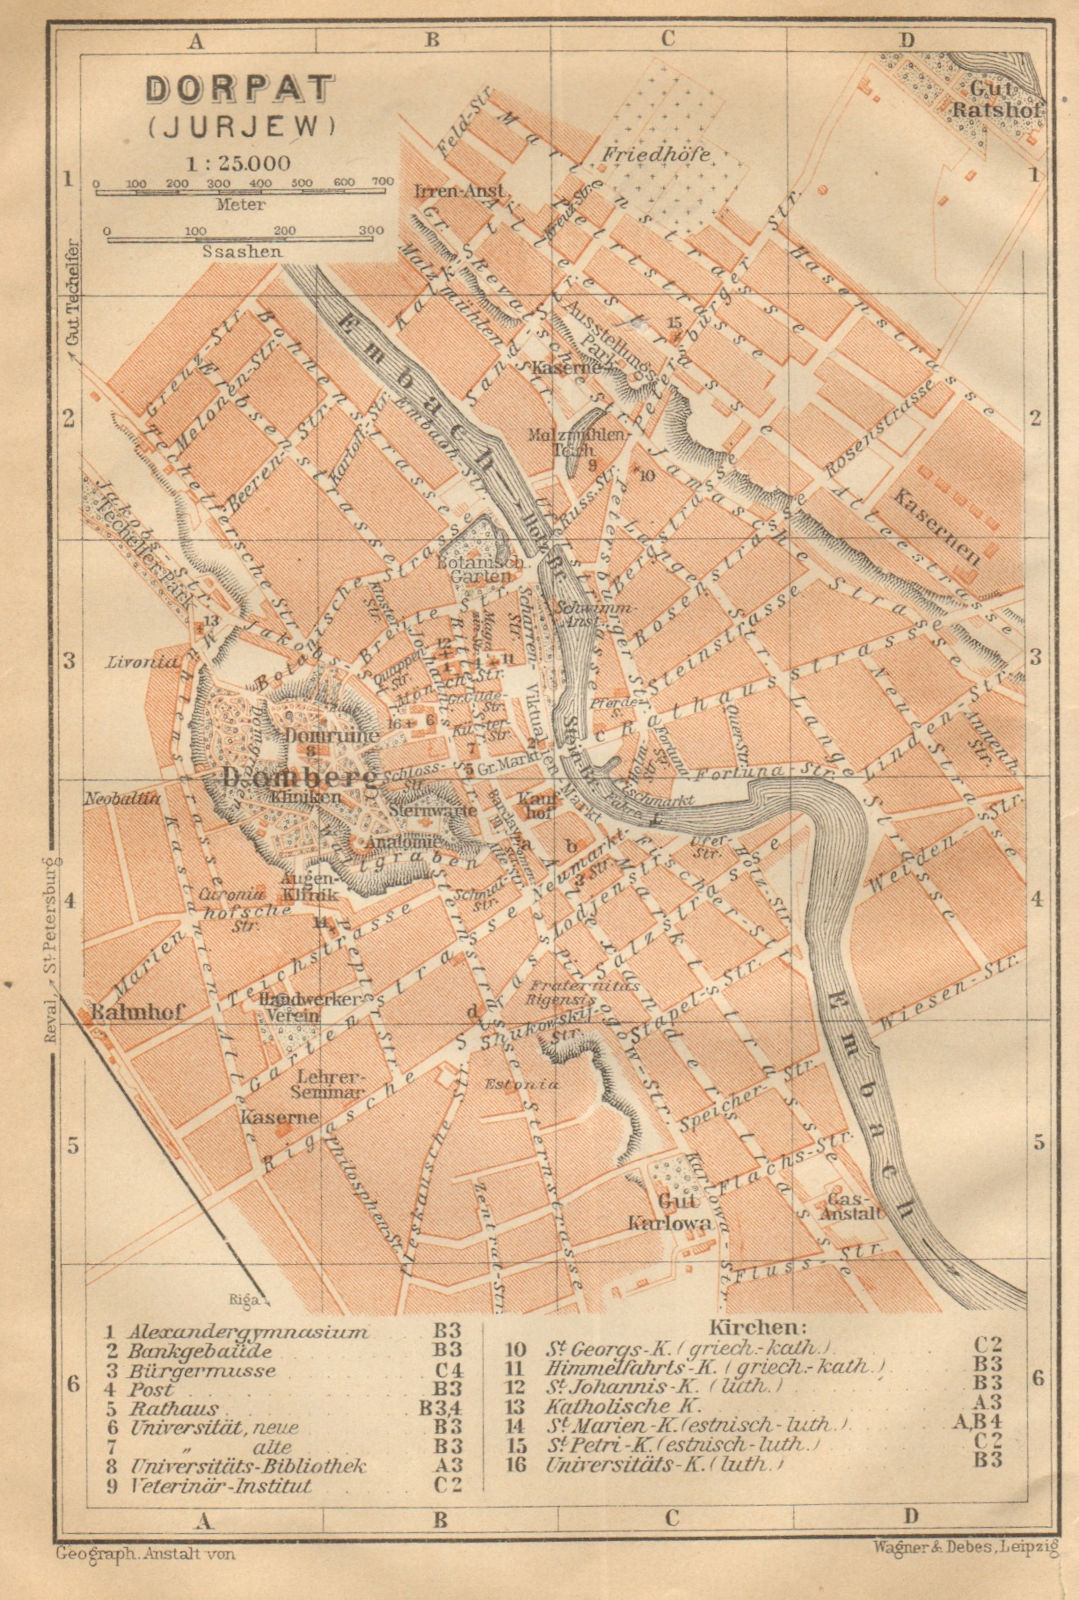 Tartu town/city plan linna kaart. Estonia. Dorpat/Jurjew. BAEDEKER 1912 map